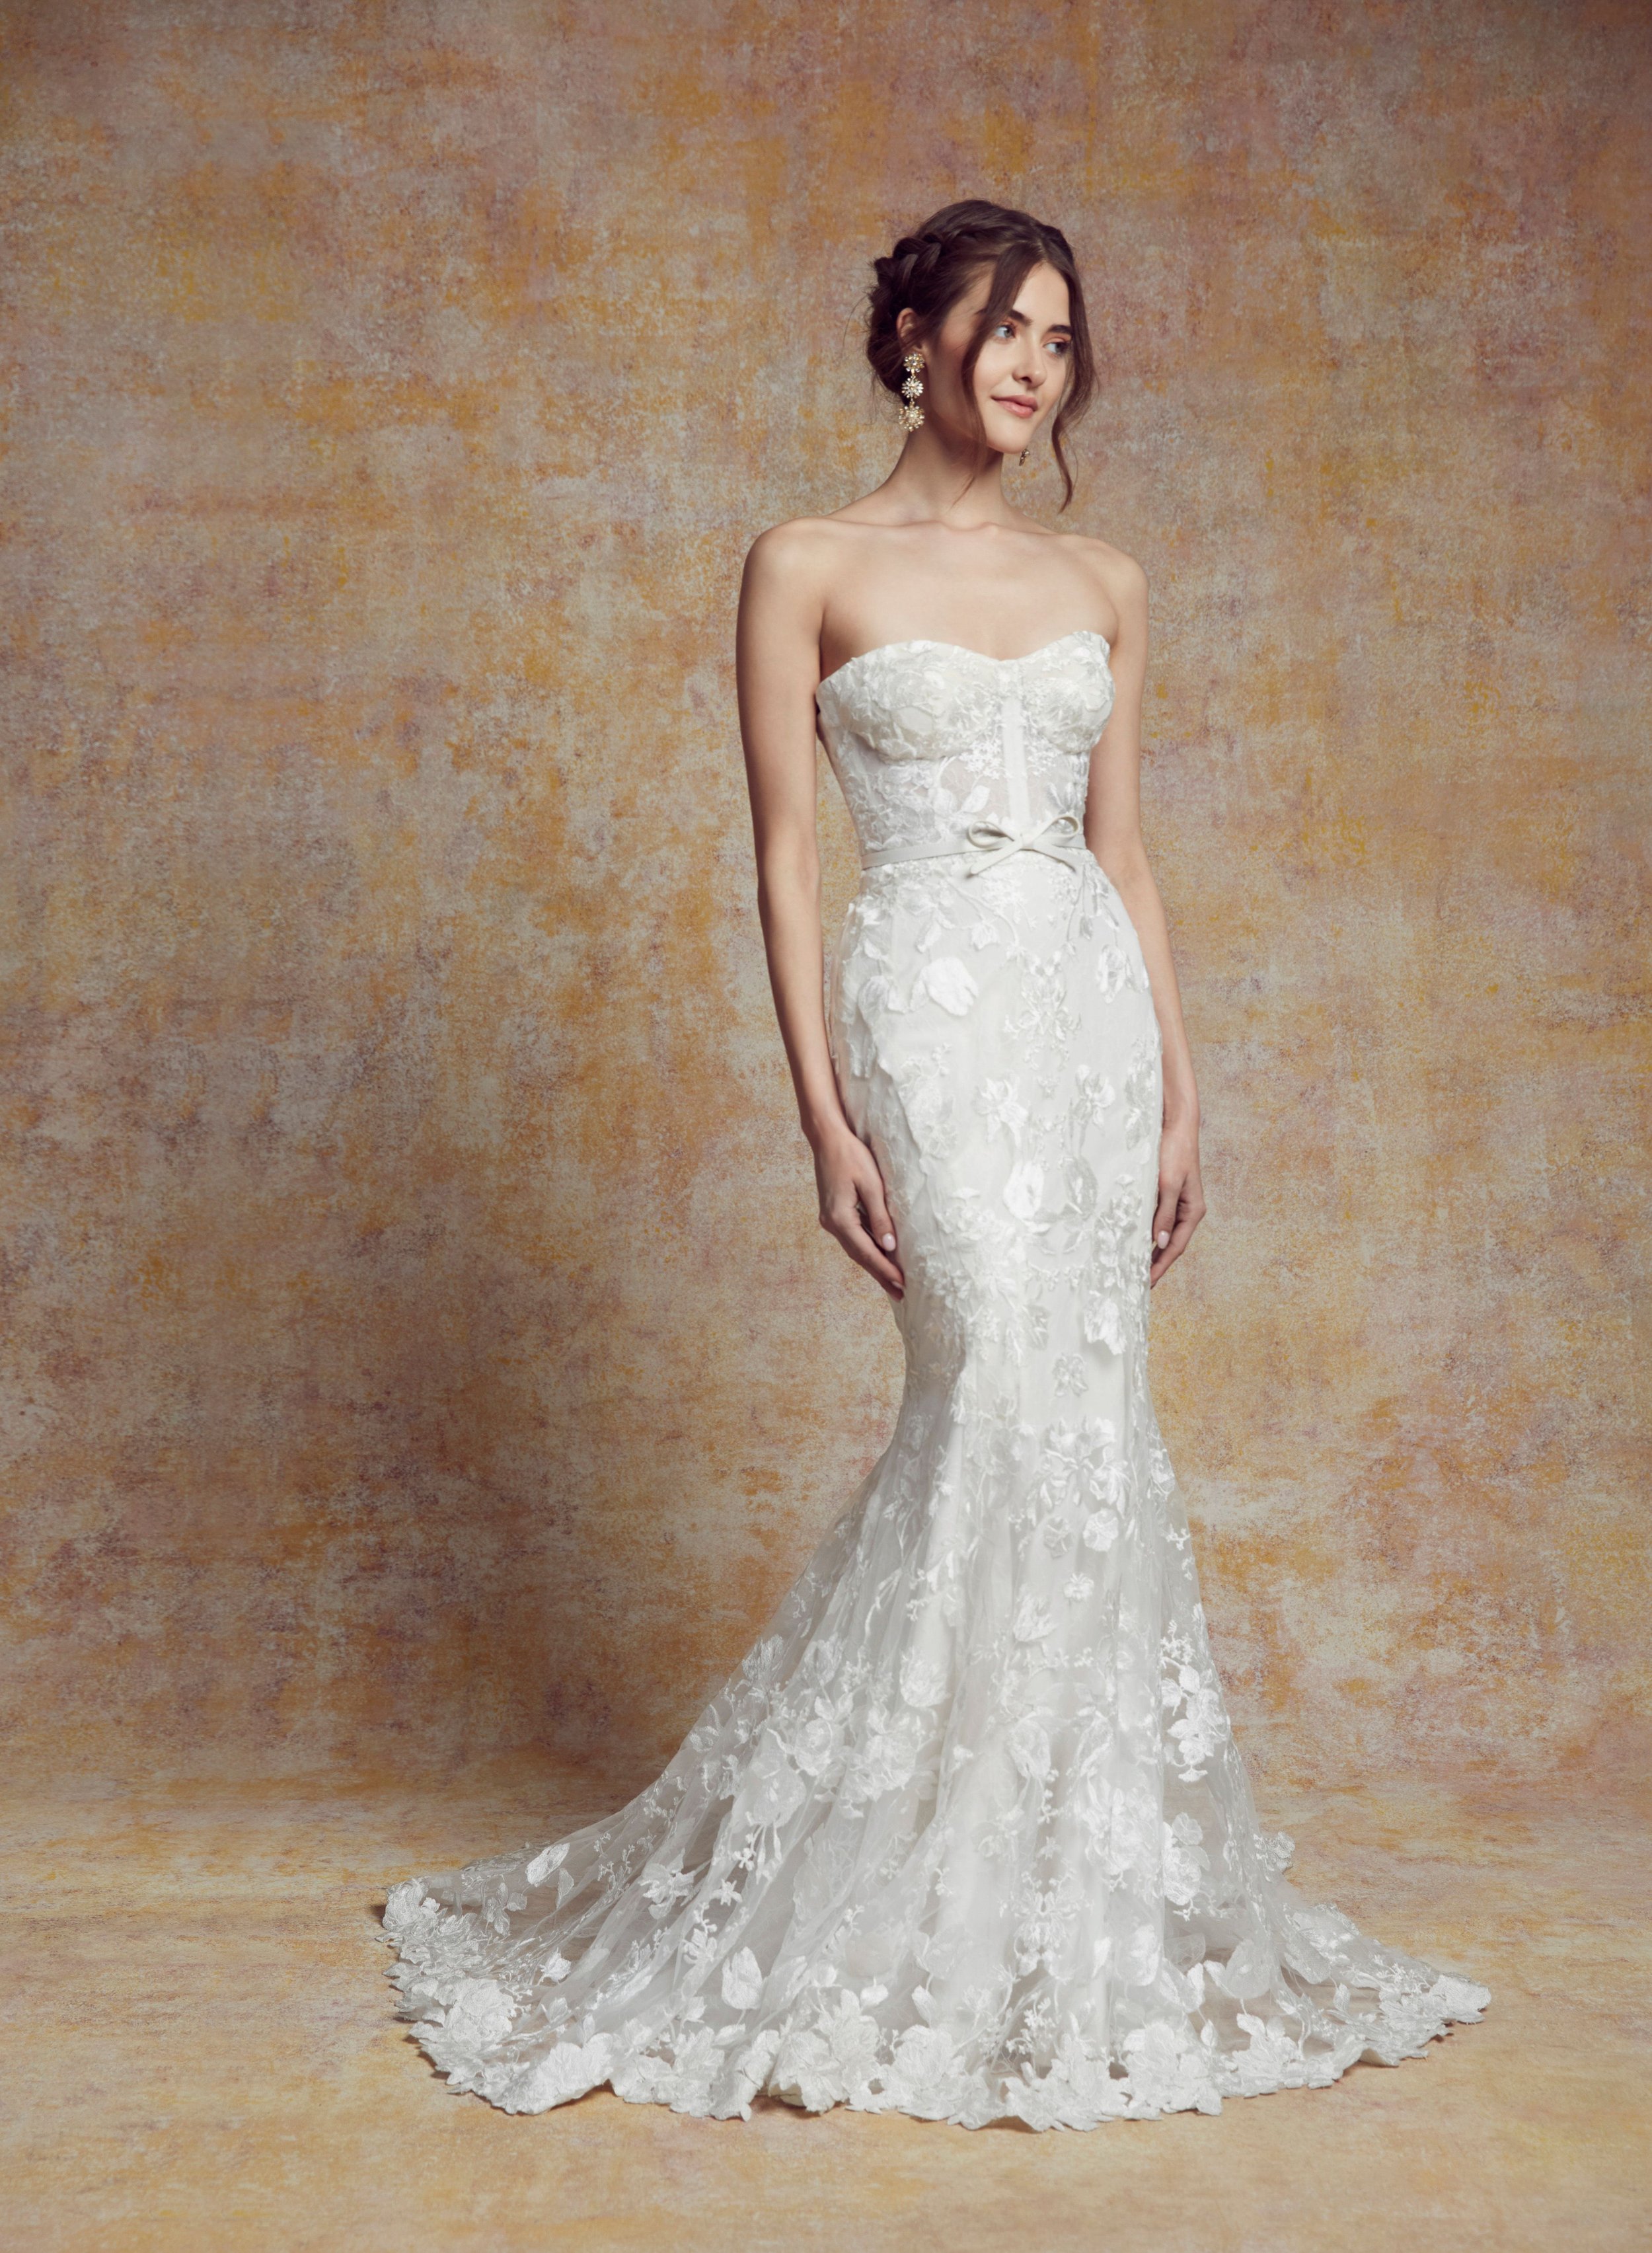 blanc-de-blanc-bridal-boutique-cleveland-dress-wedding-gown-Aida.jpeg